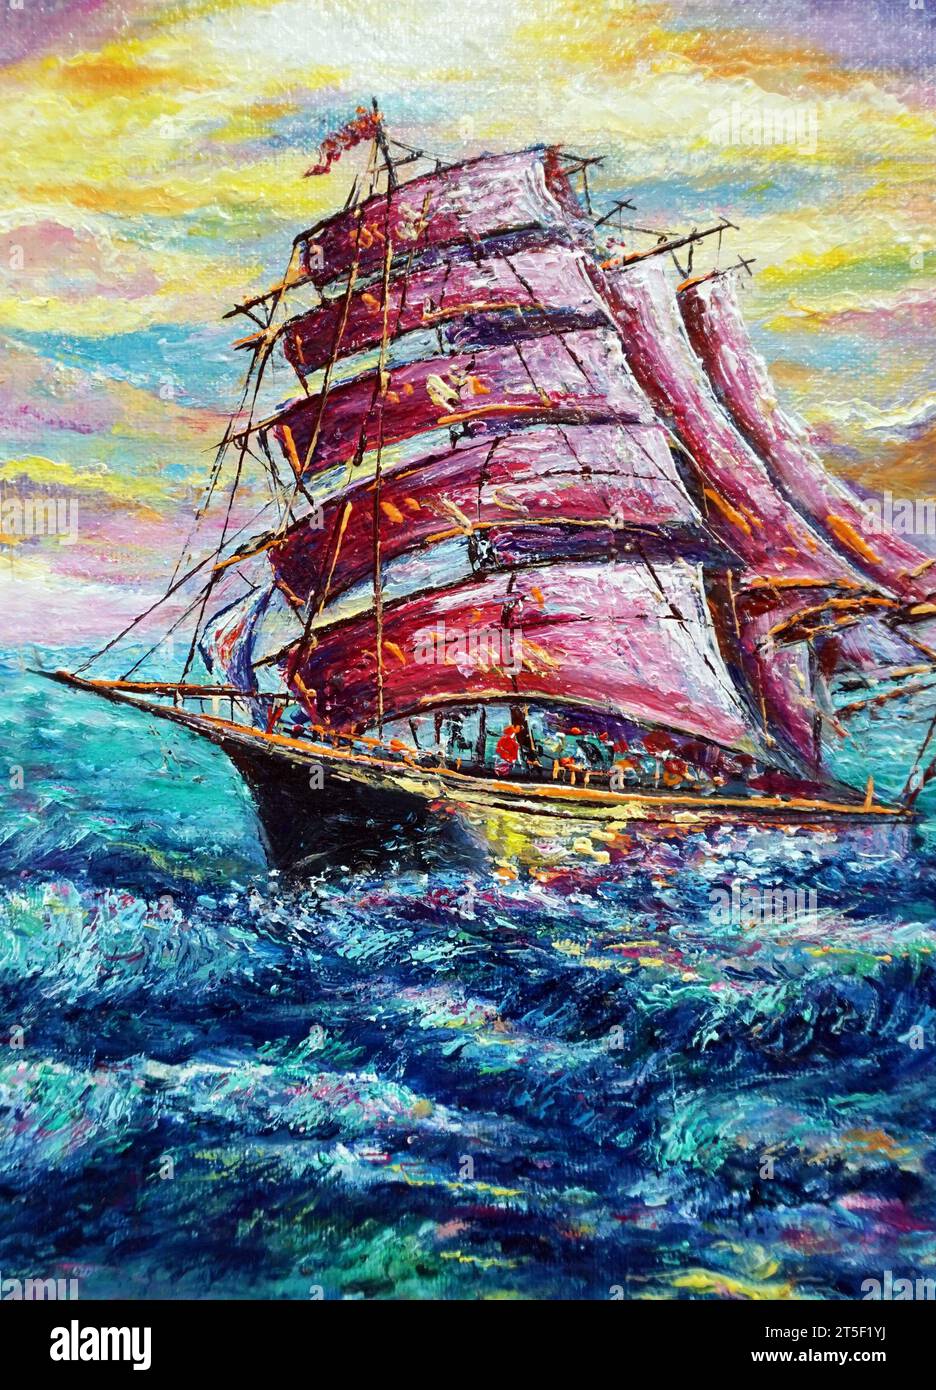 creativity activity art oil painting sailboat Stock Photo